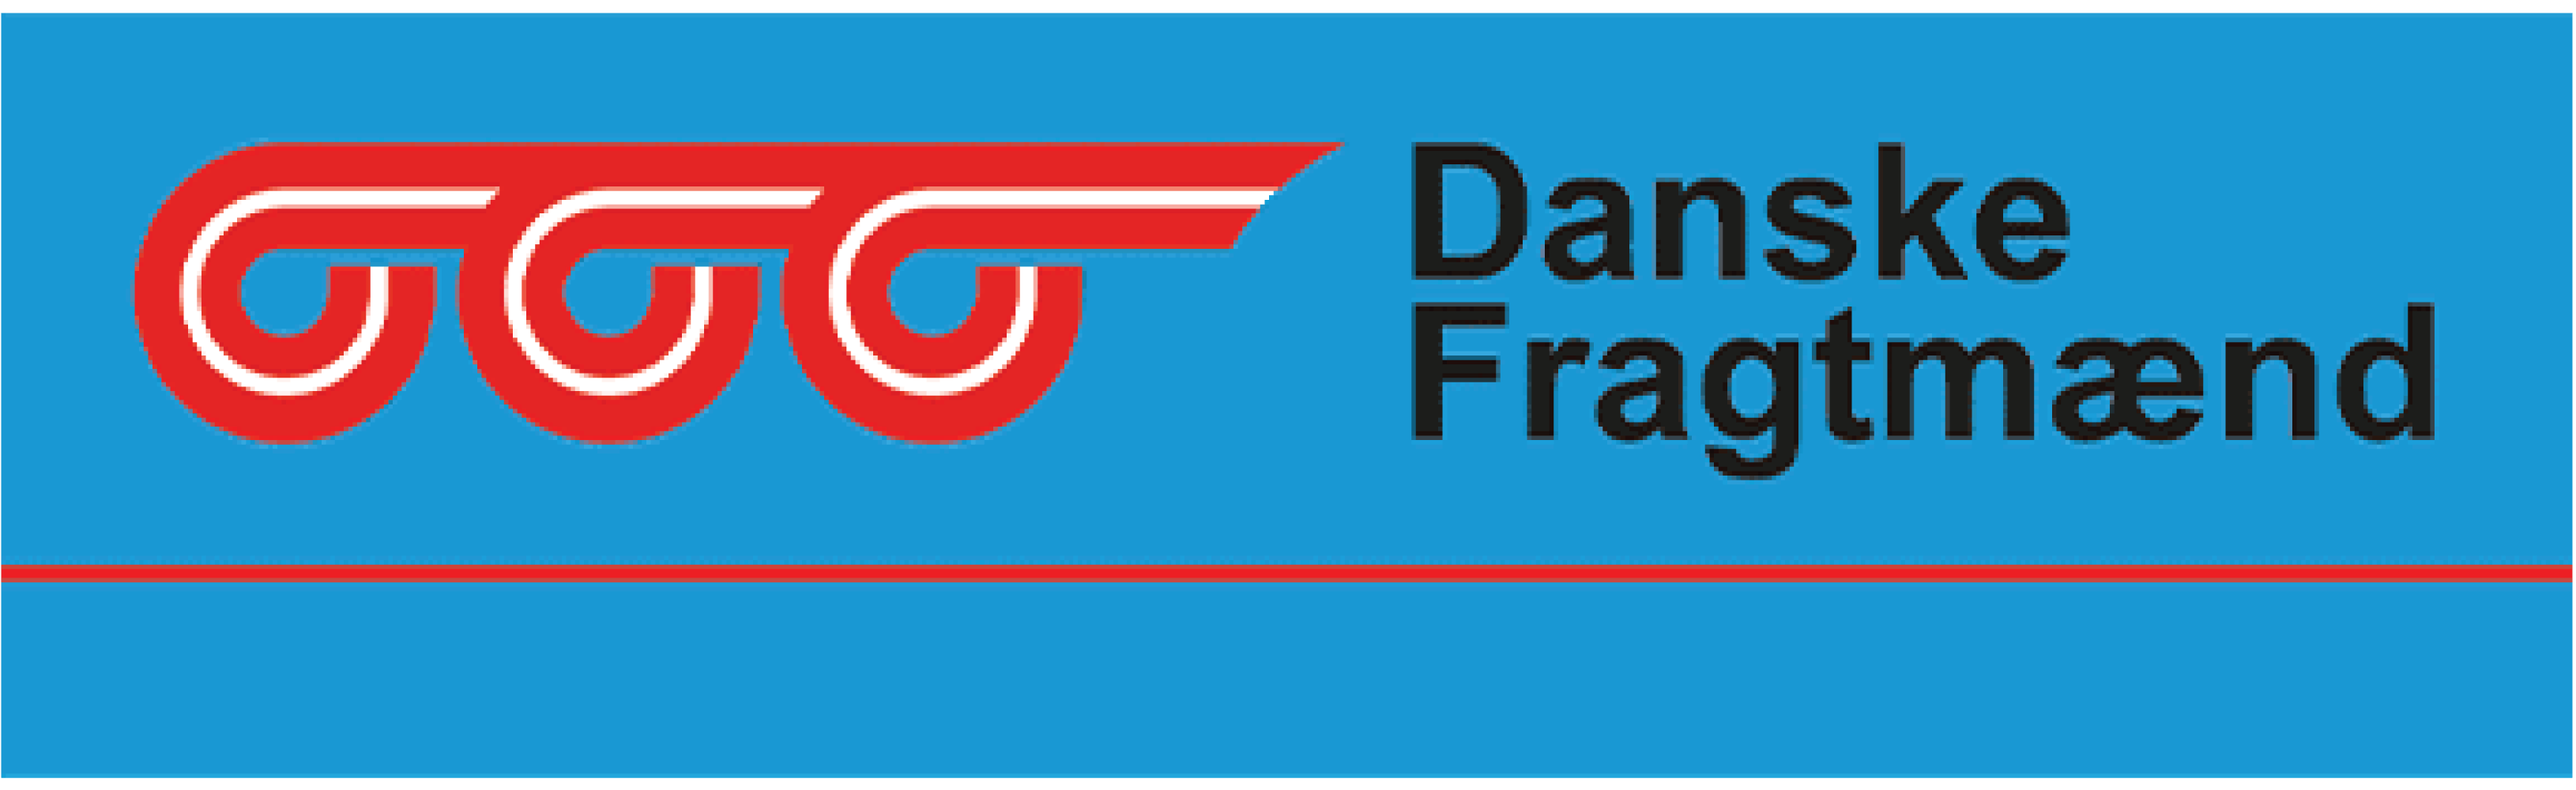 Danske Fragtmaend logo